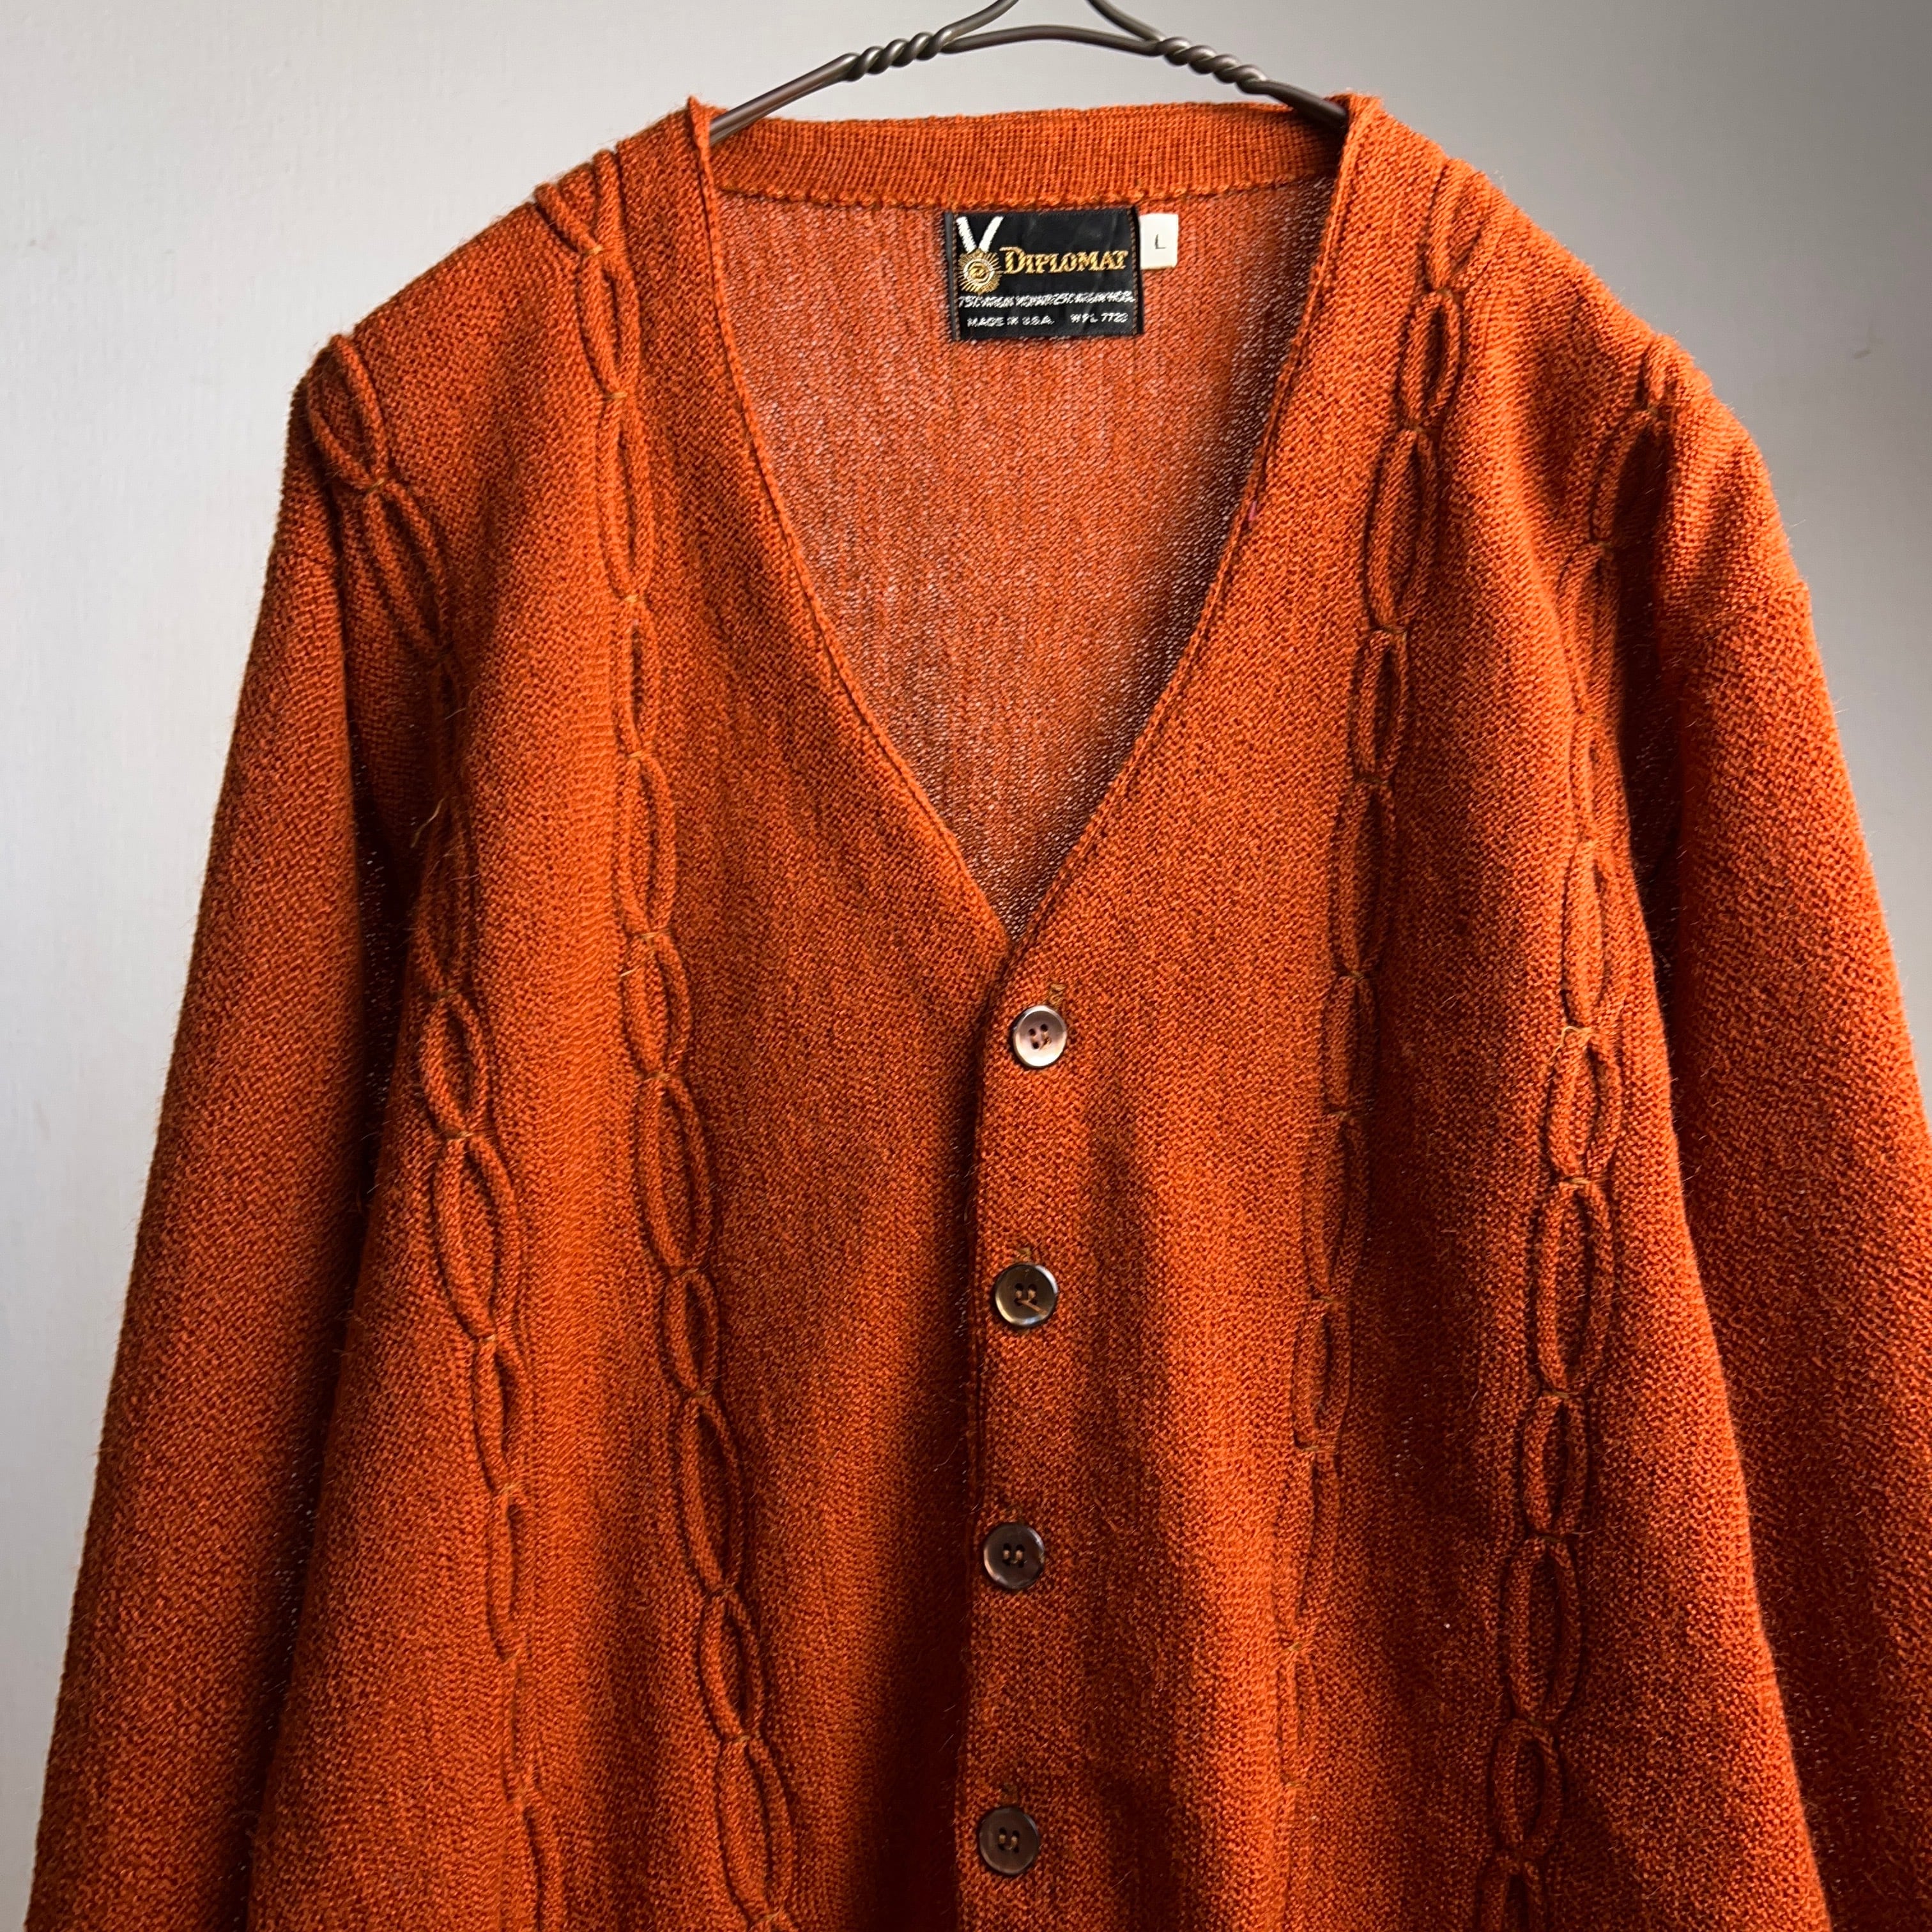 60's DIPLOMAT MOHAIR75% Knit Cardigan USA製 SIZE L 60年代 モヘアニットカーディガン オレンジ  【1000A87】【送料無料】